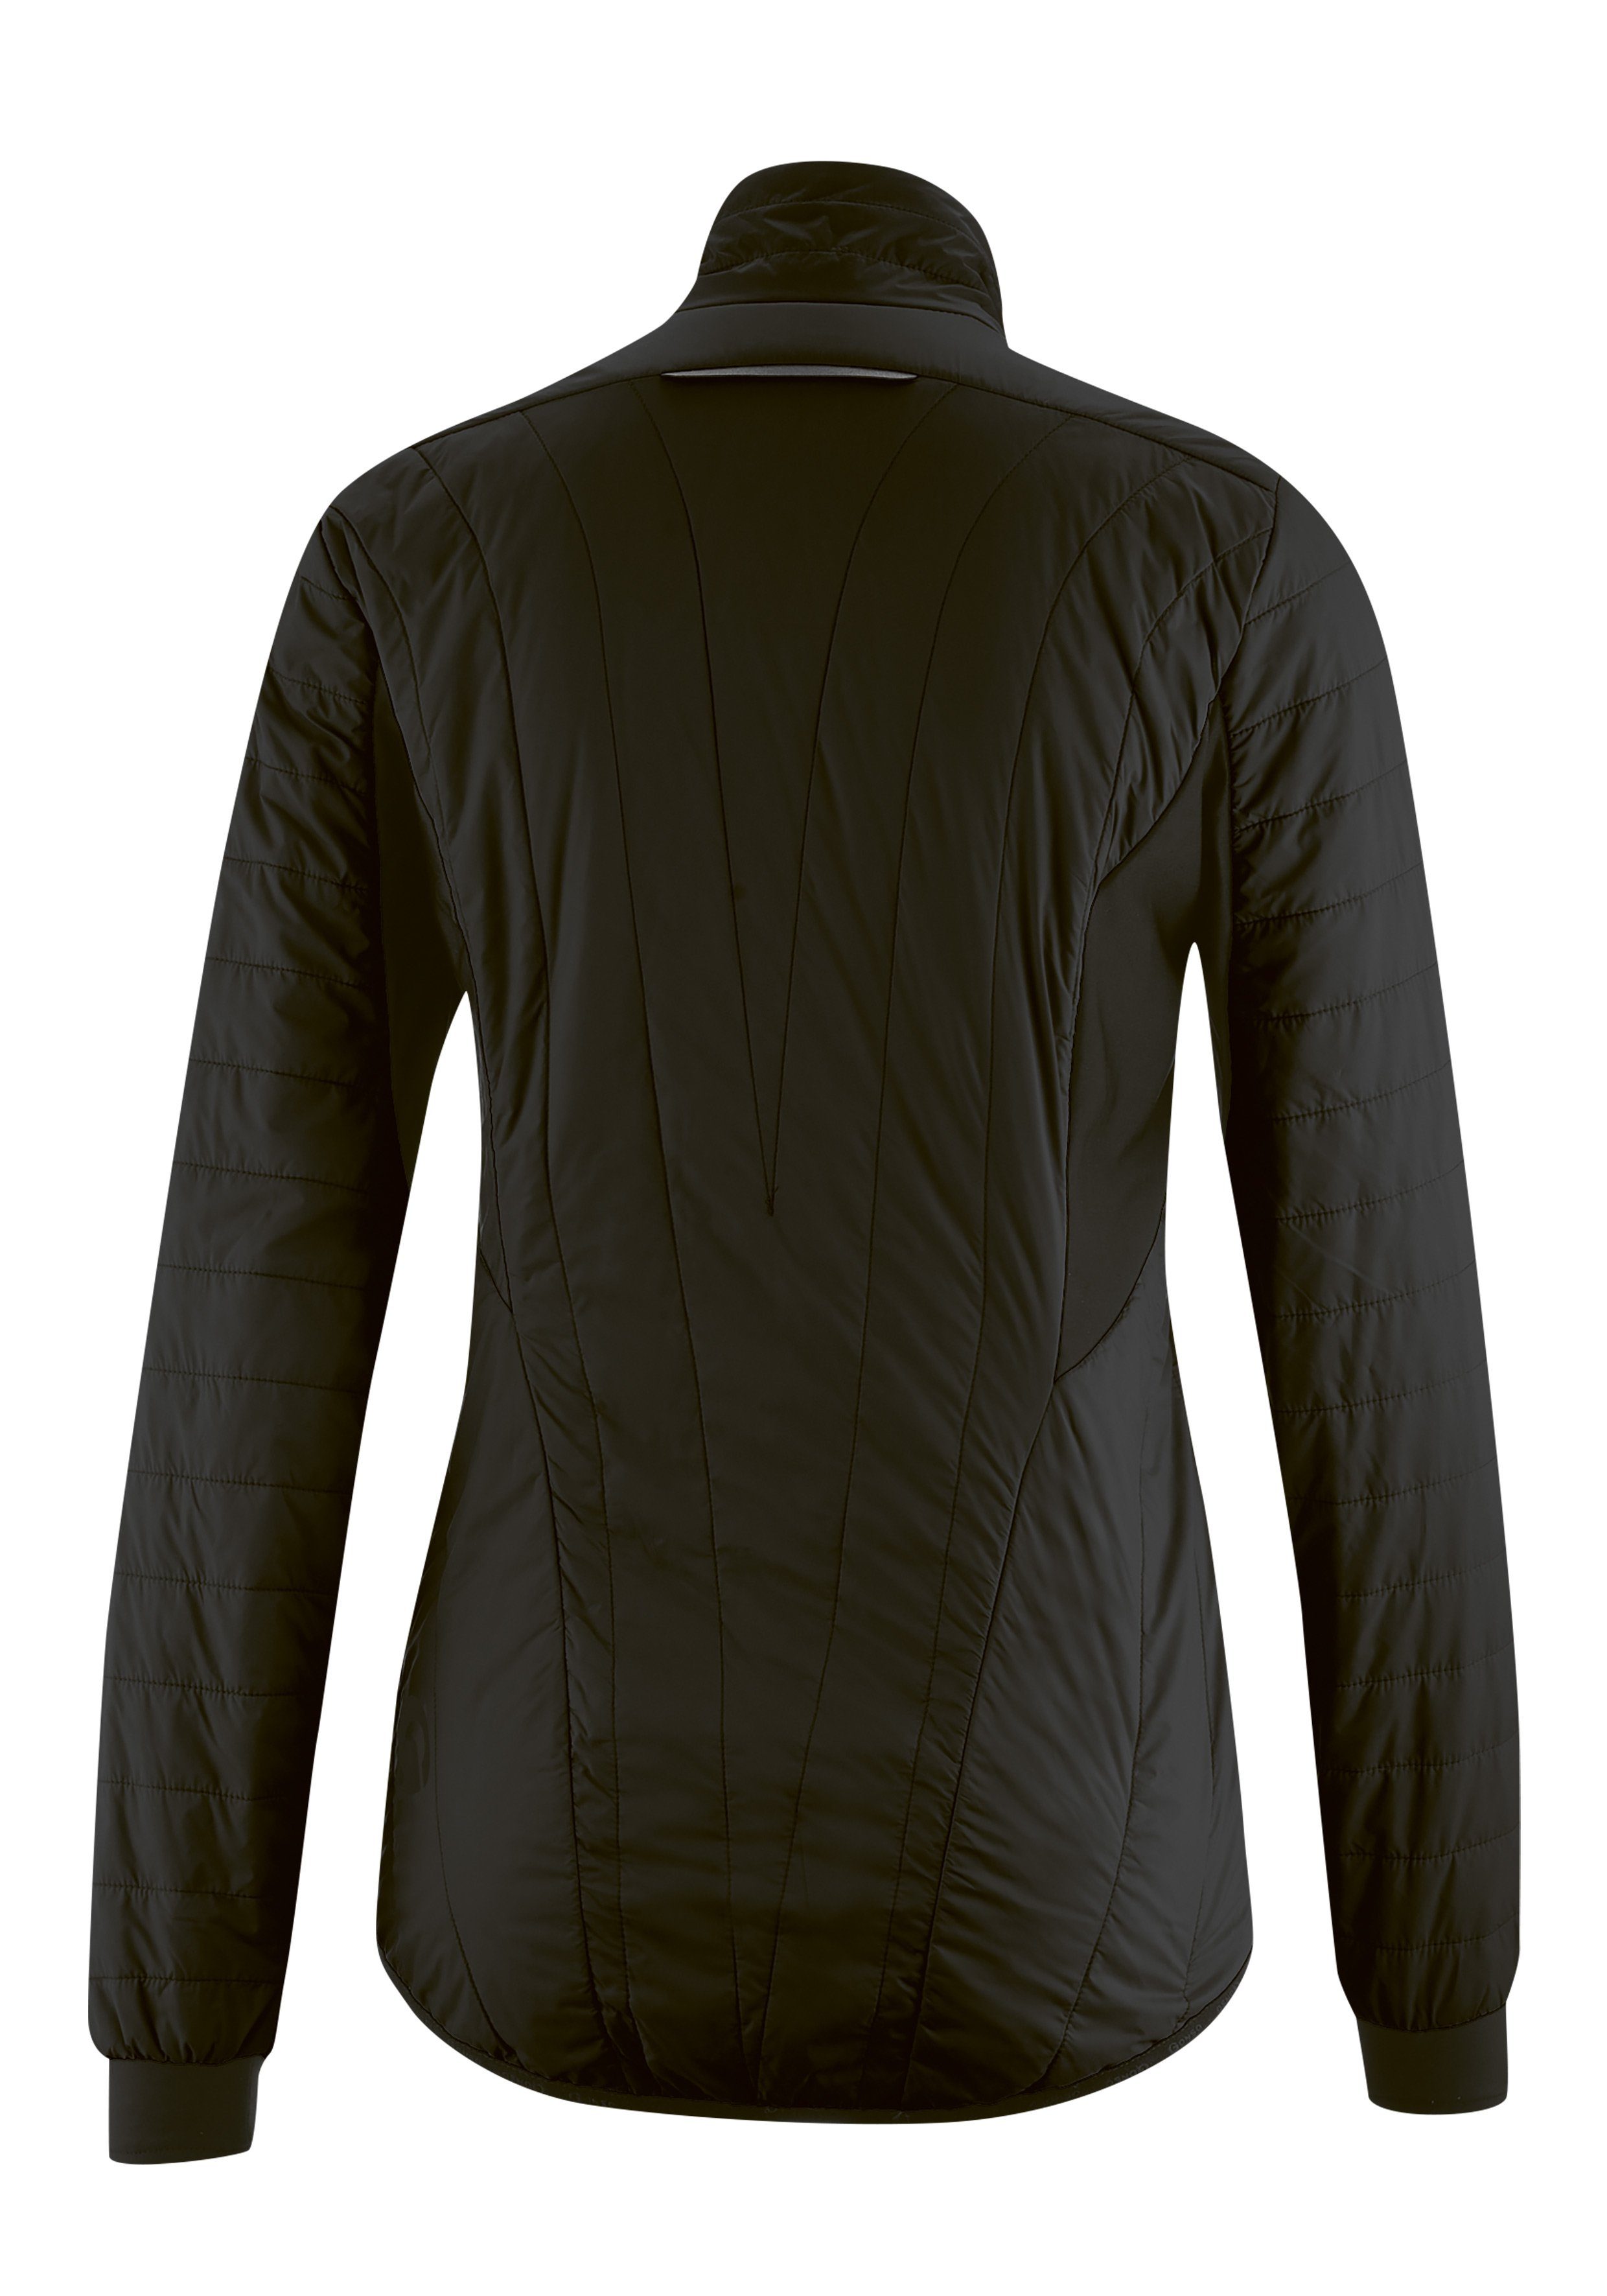 Fahrradjacke Primaloft-Jacke, schwarz Teixeira warm, atmungsaktiv Damen Gonso winddicht und